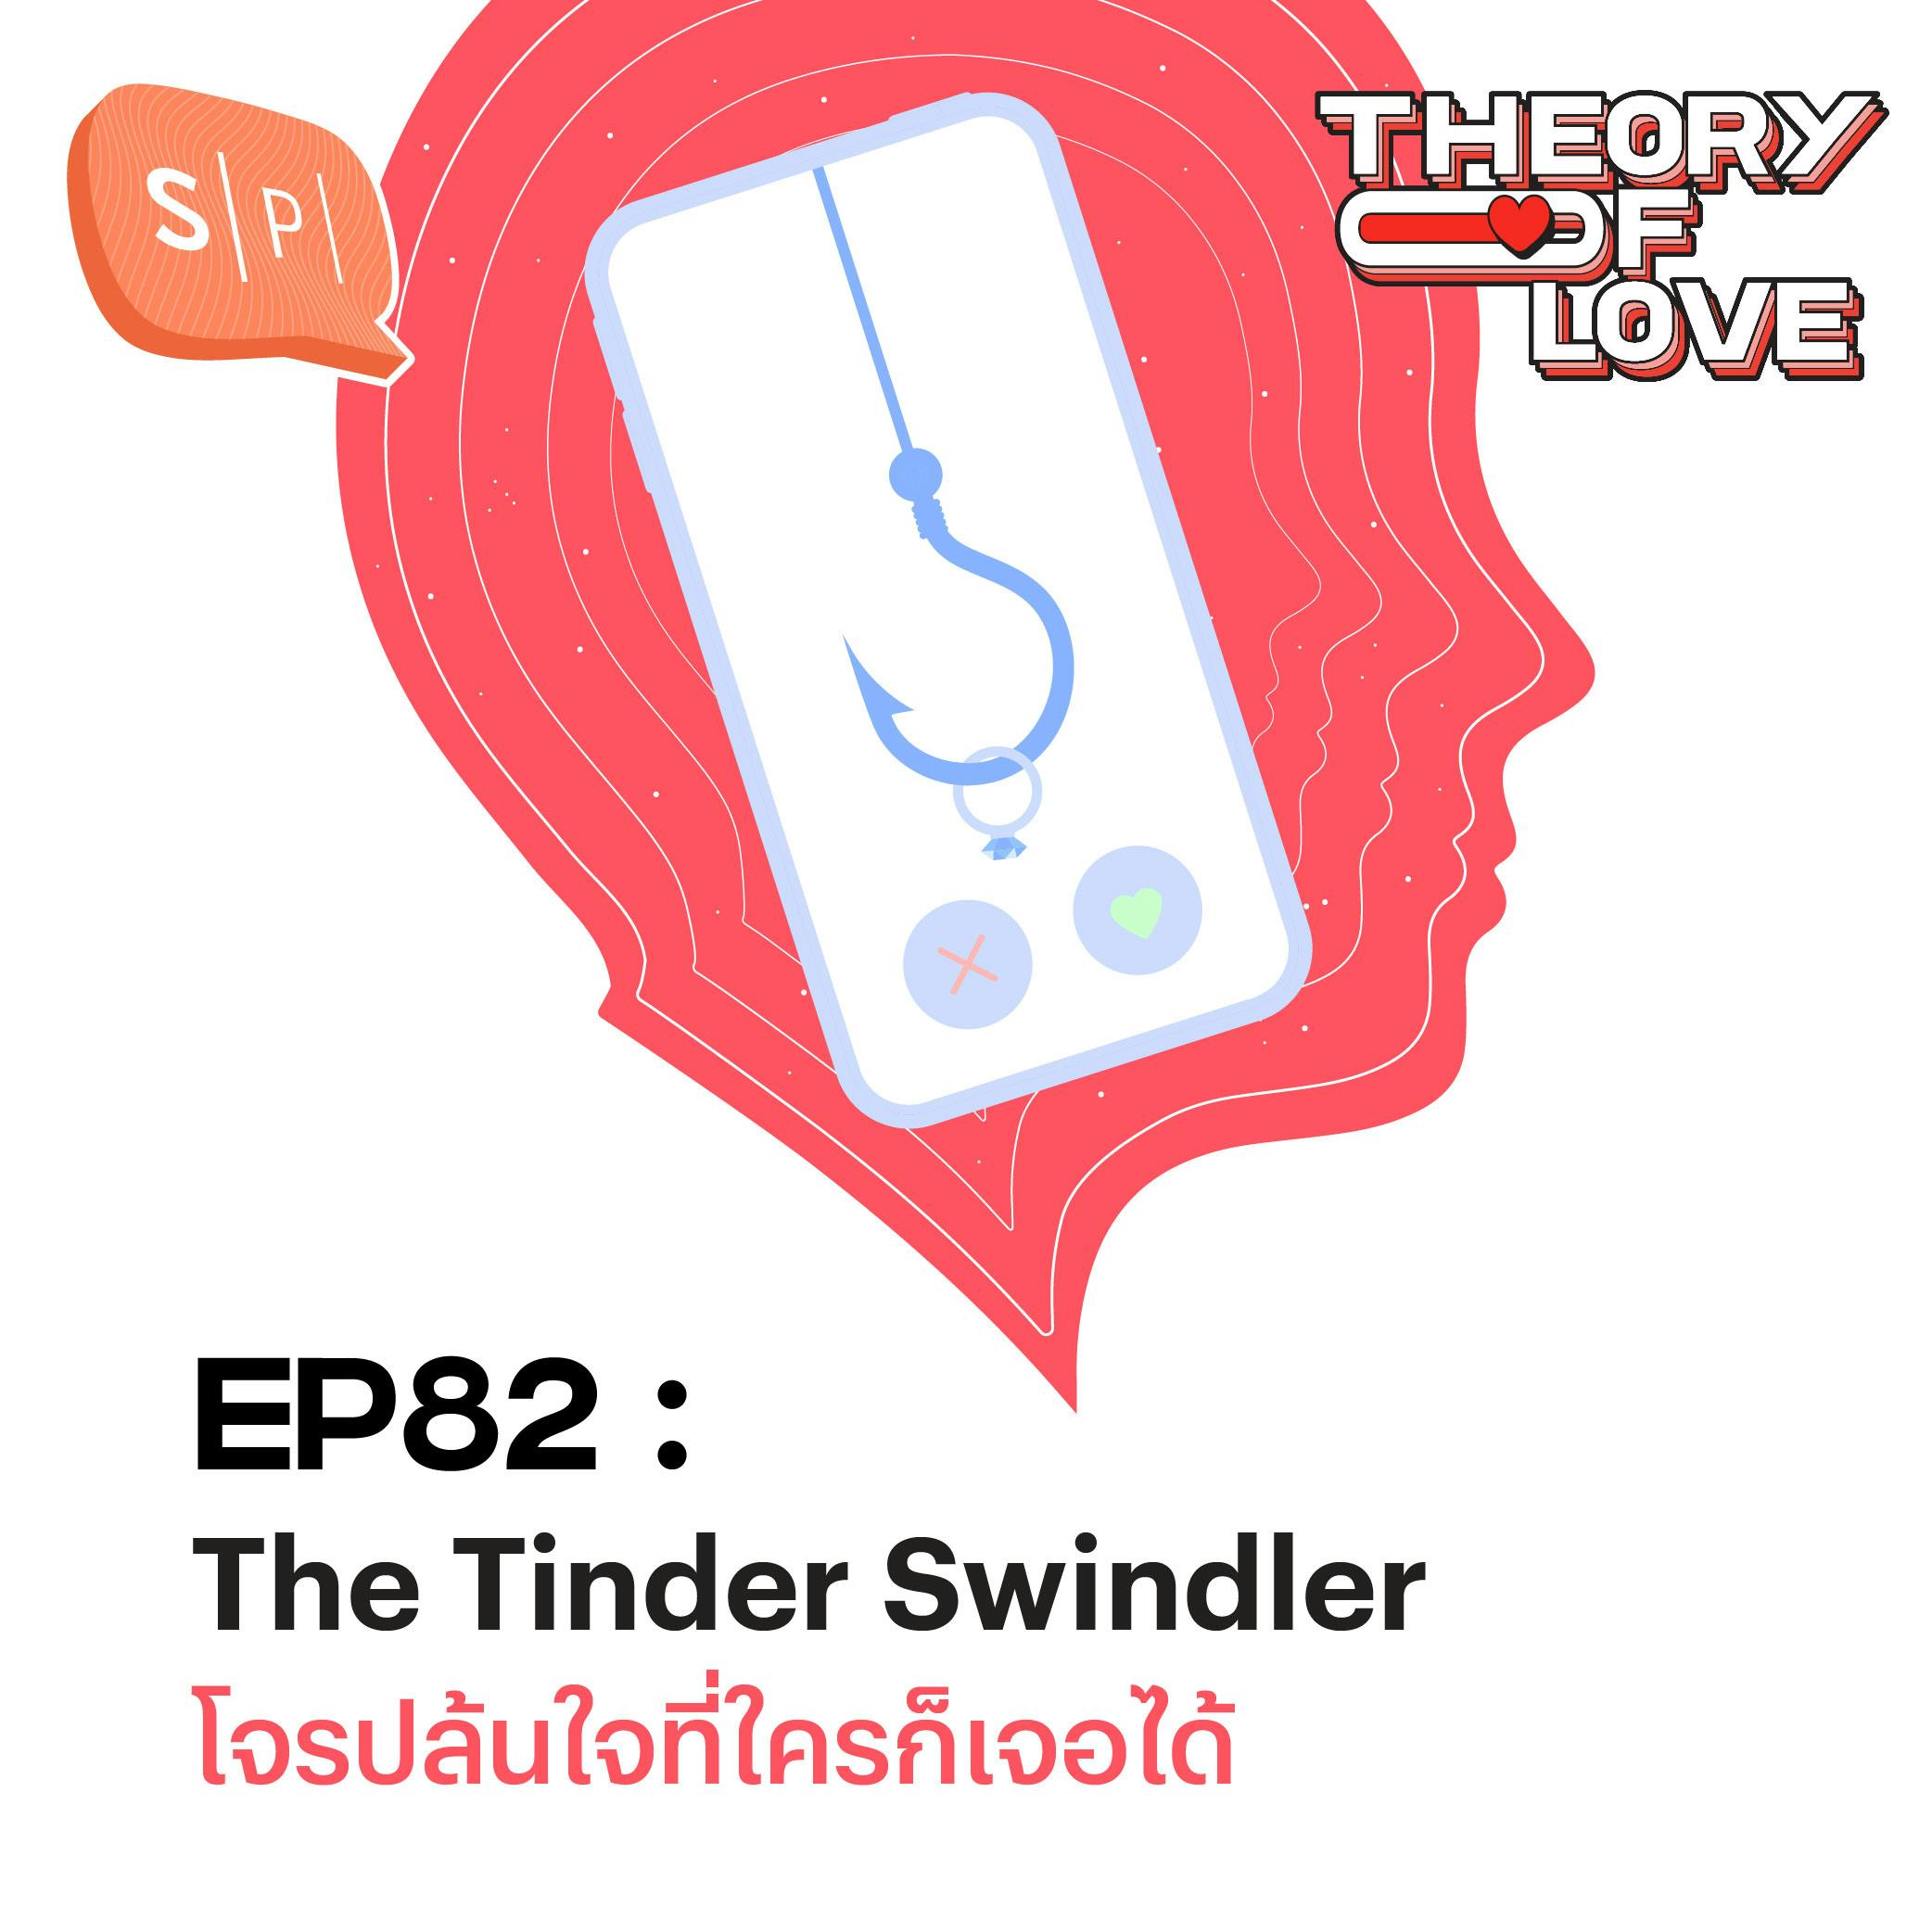 The Tinder Swindler โจรปล้นใจที่ใครก็เจอได้ | EP82